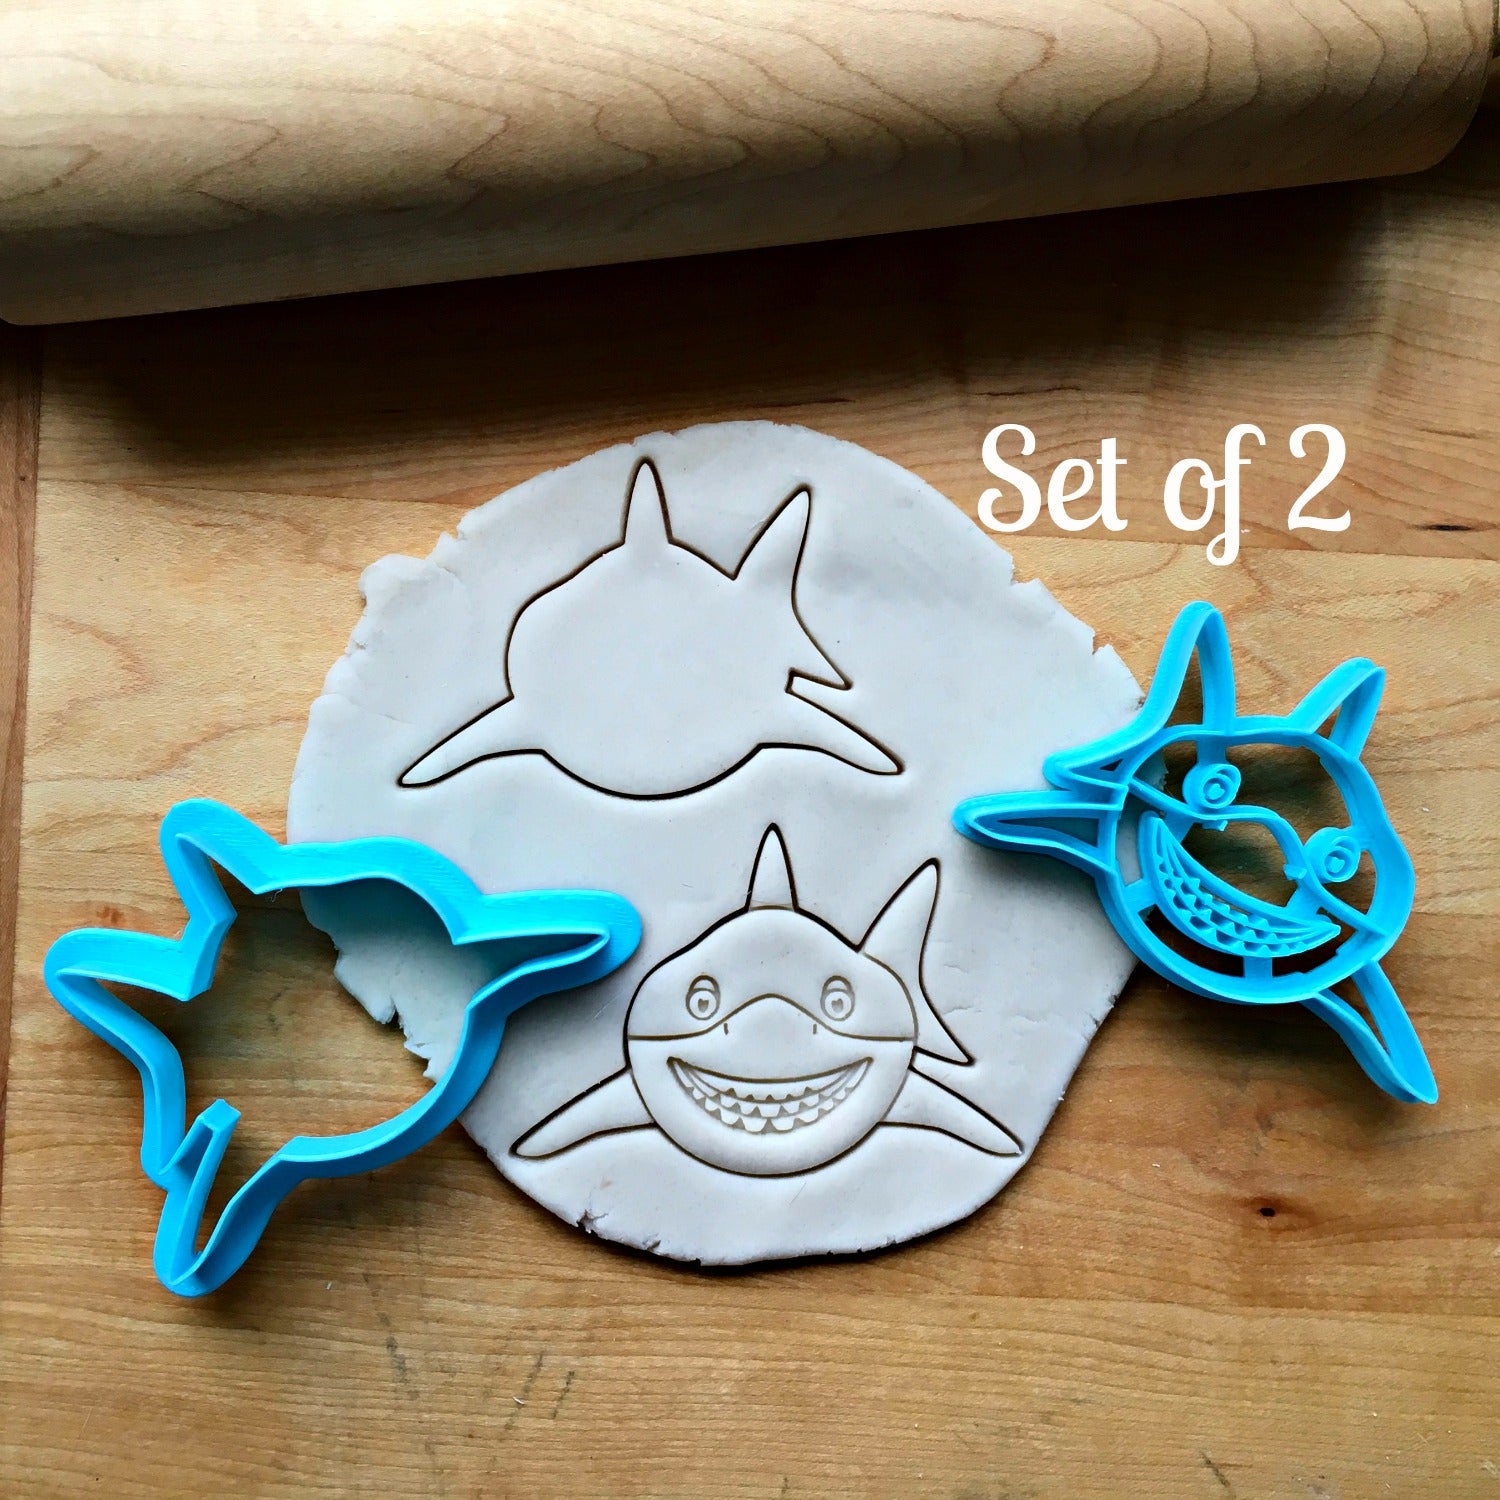 Set of 2 Smiling Shark Face Cookie Cutters/Dishwasher Safe